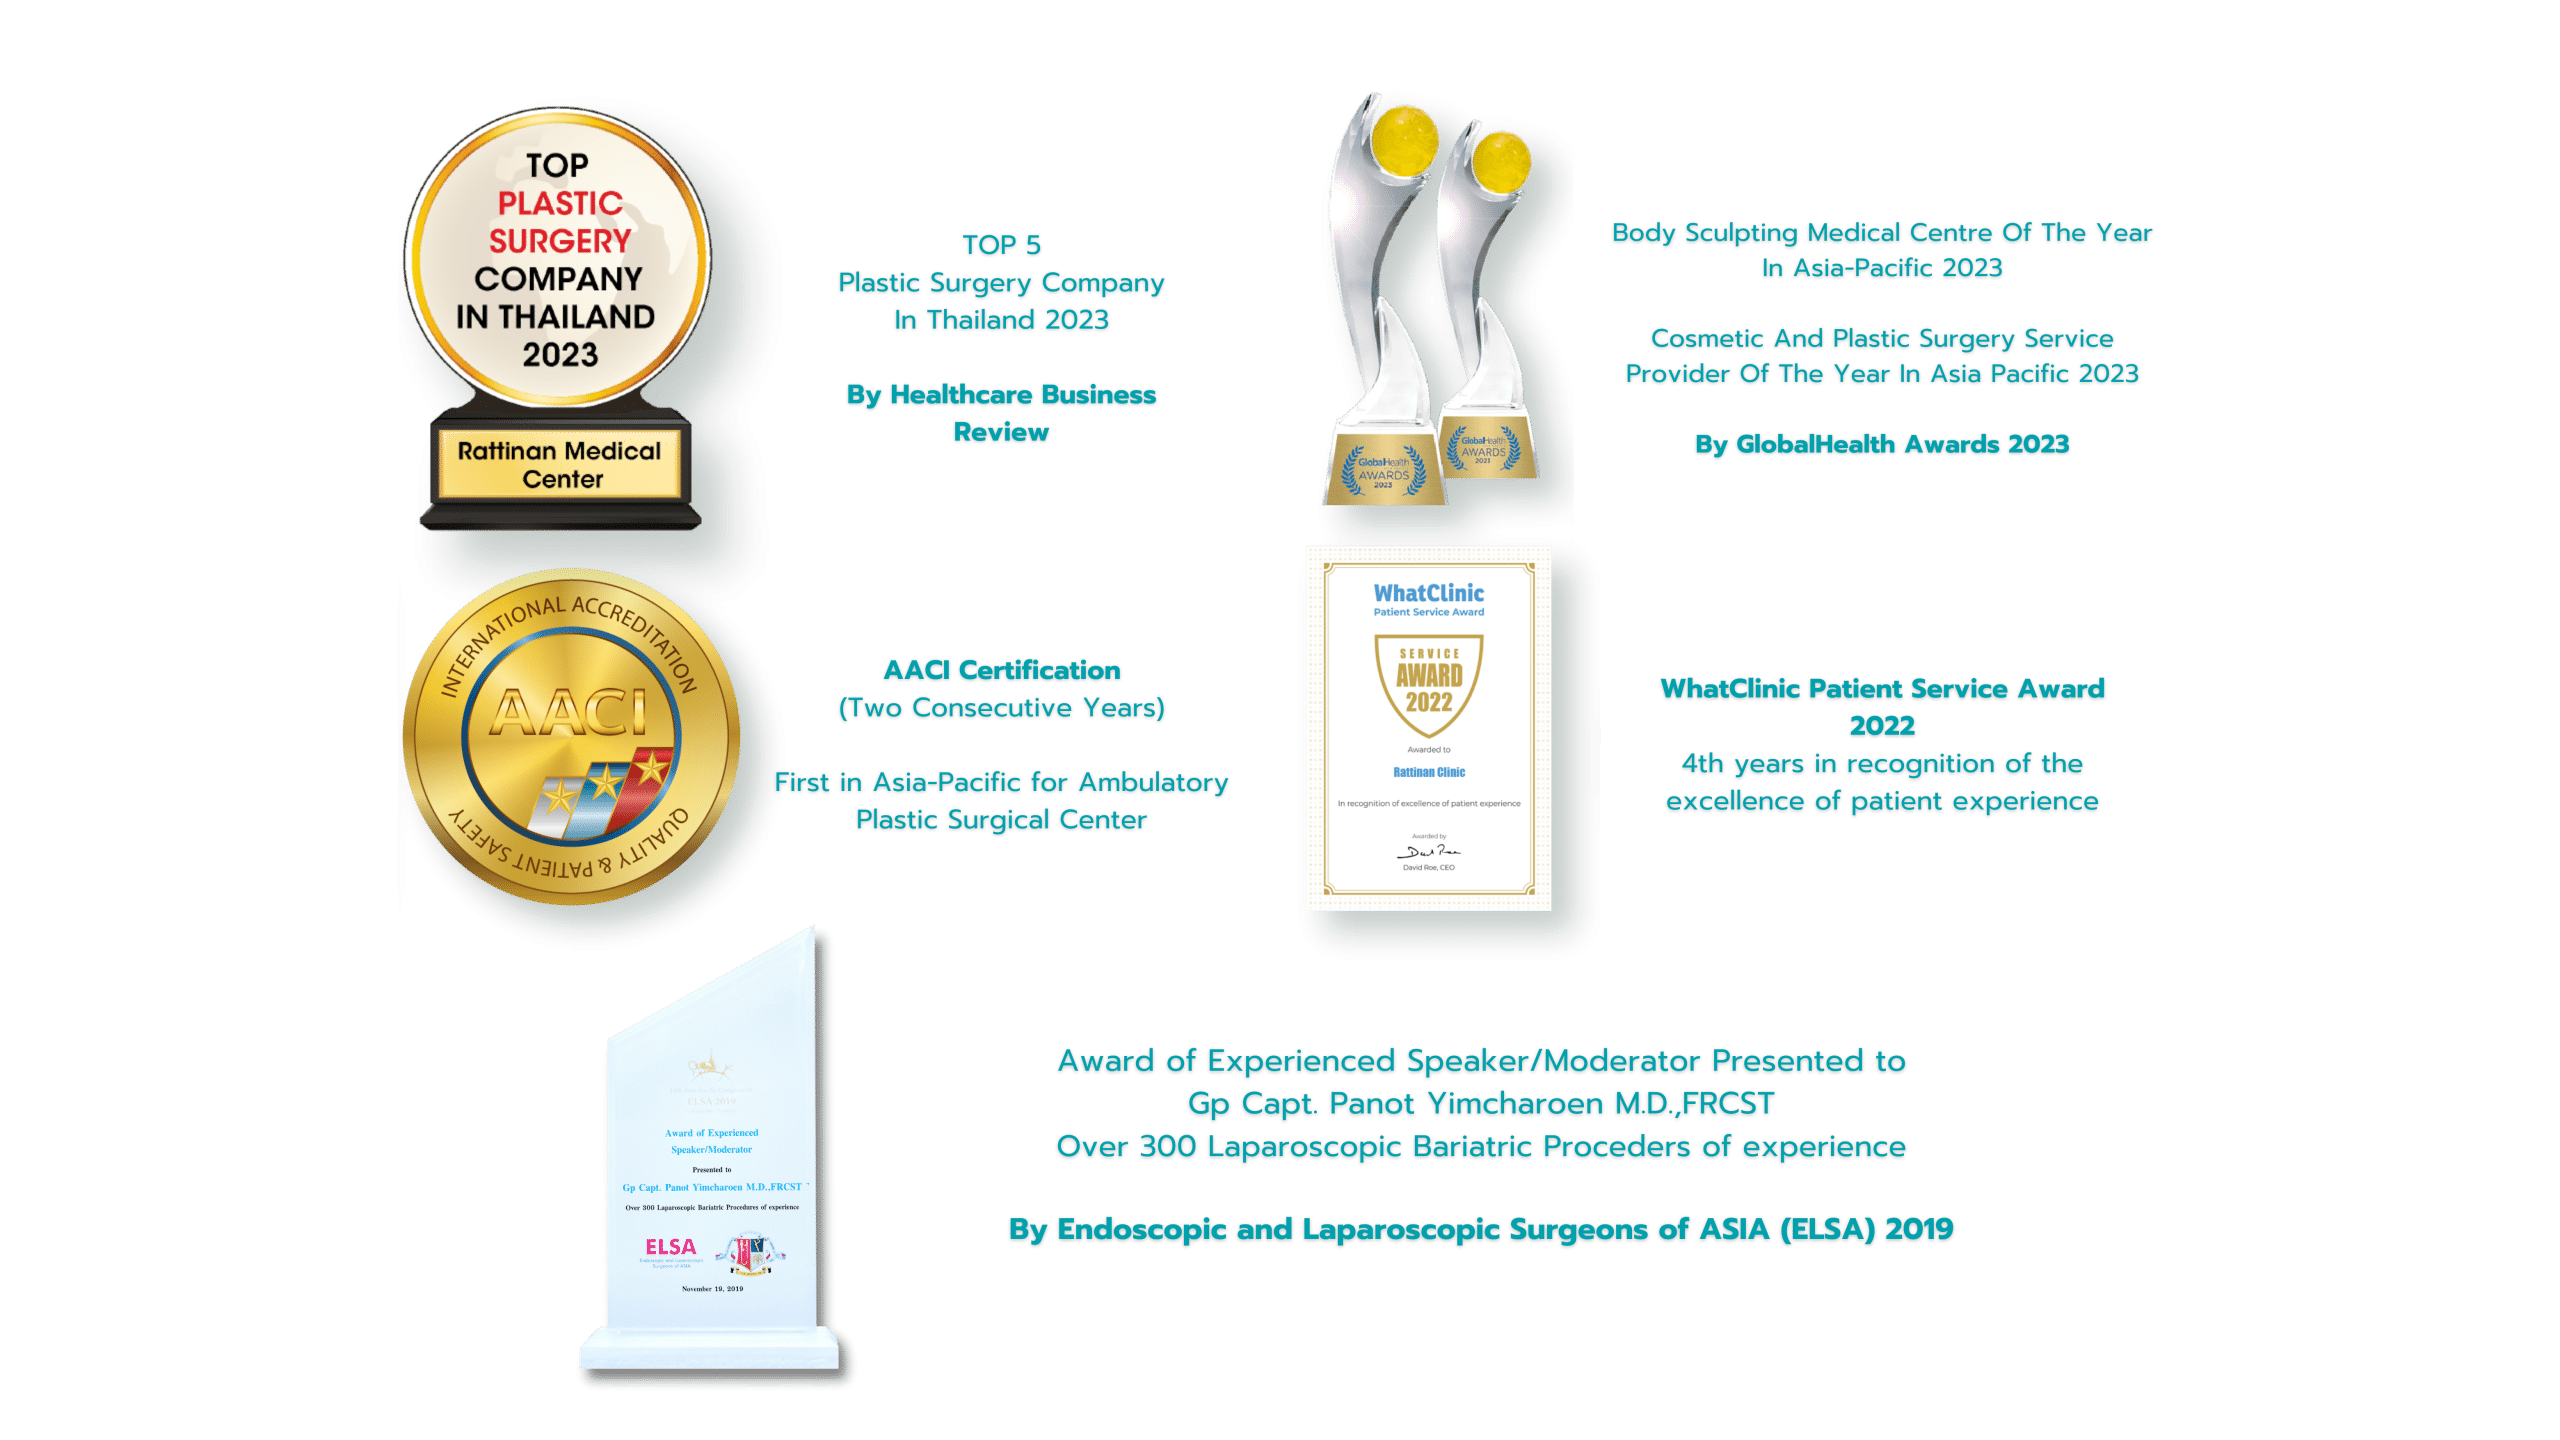 gastric awards